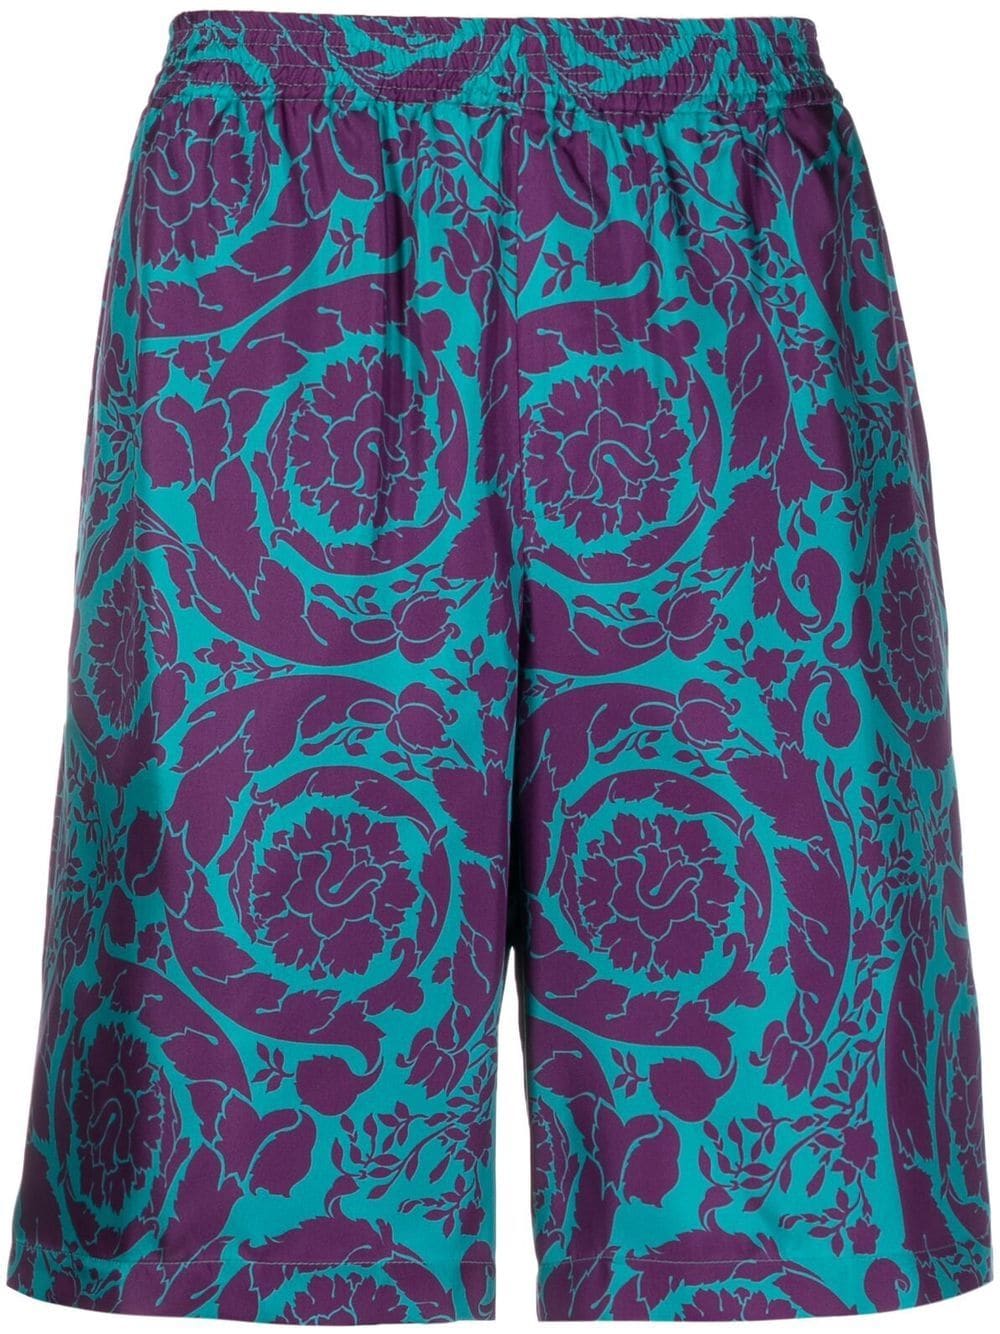 Versace Teal & Plum Barocco Silk Shorts